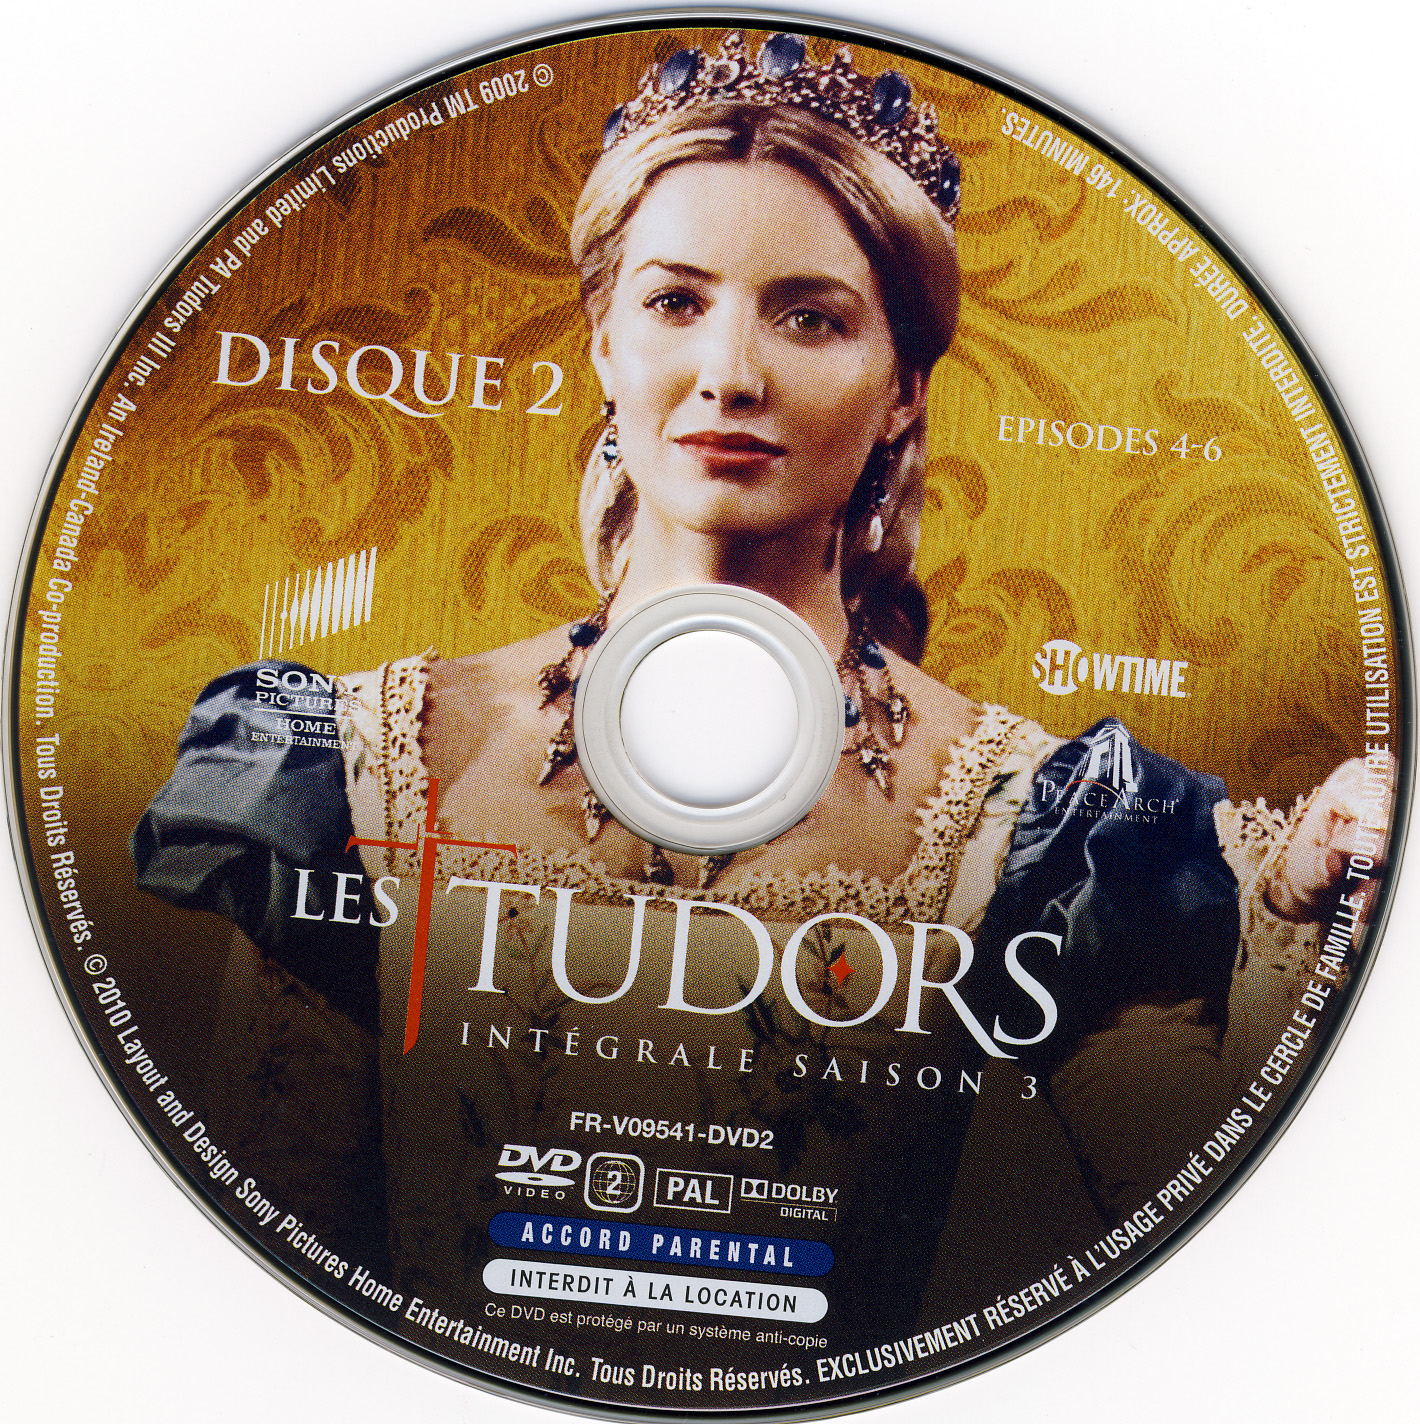 Les Tudors saison 3 DISC 2